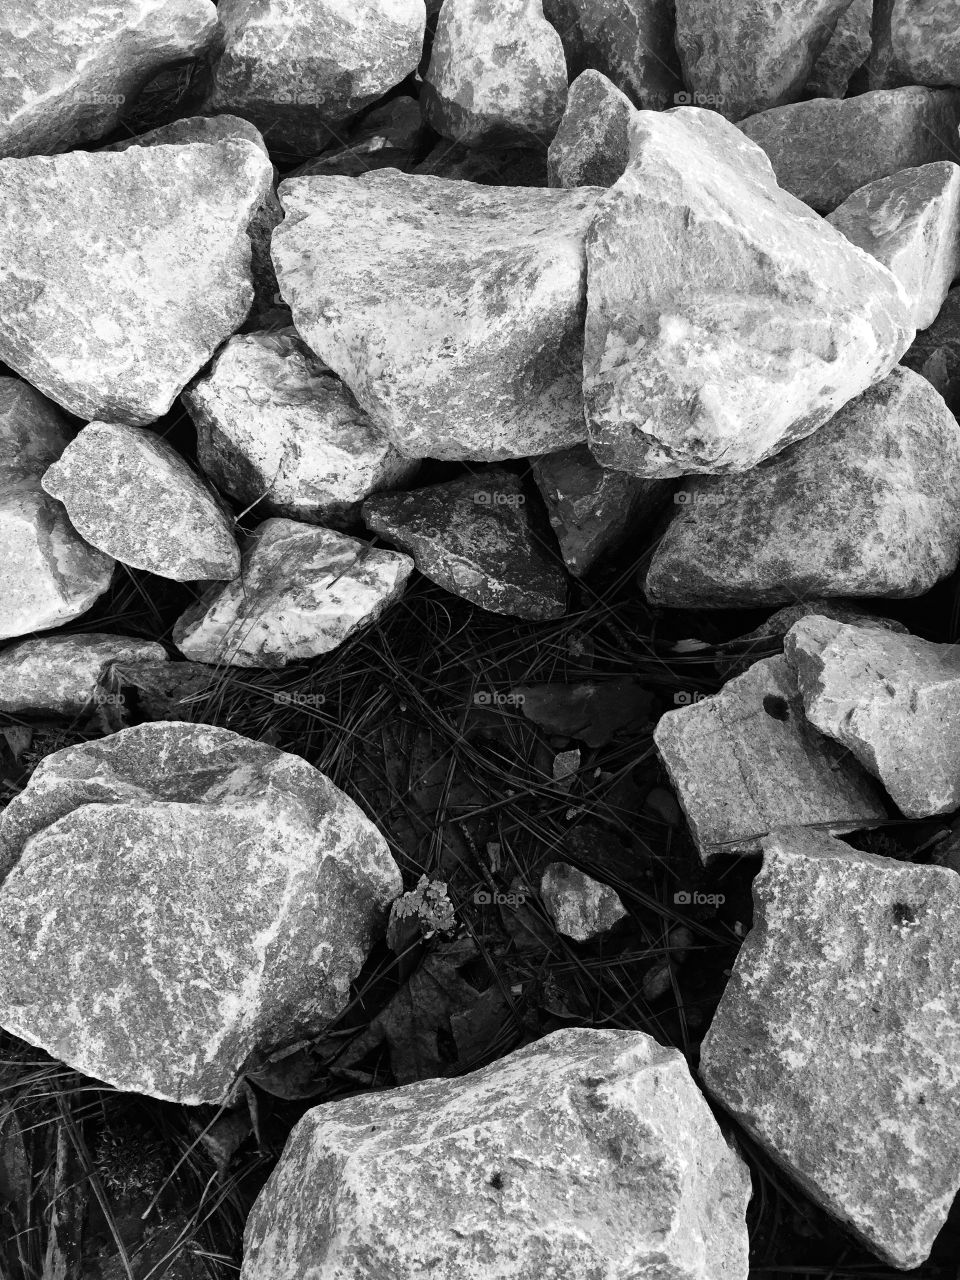 Black and white rocks!